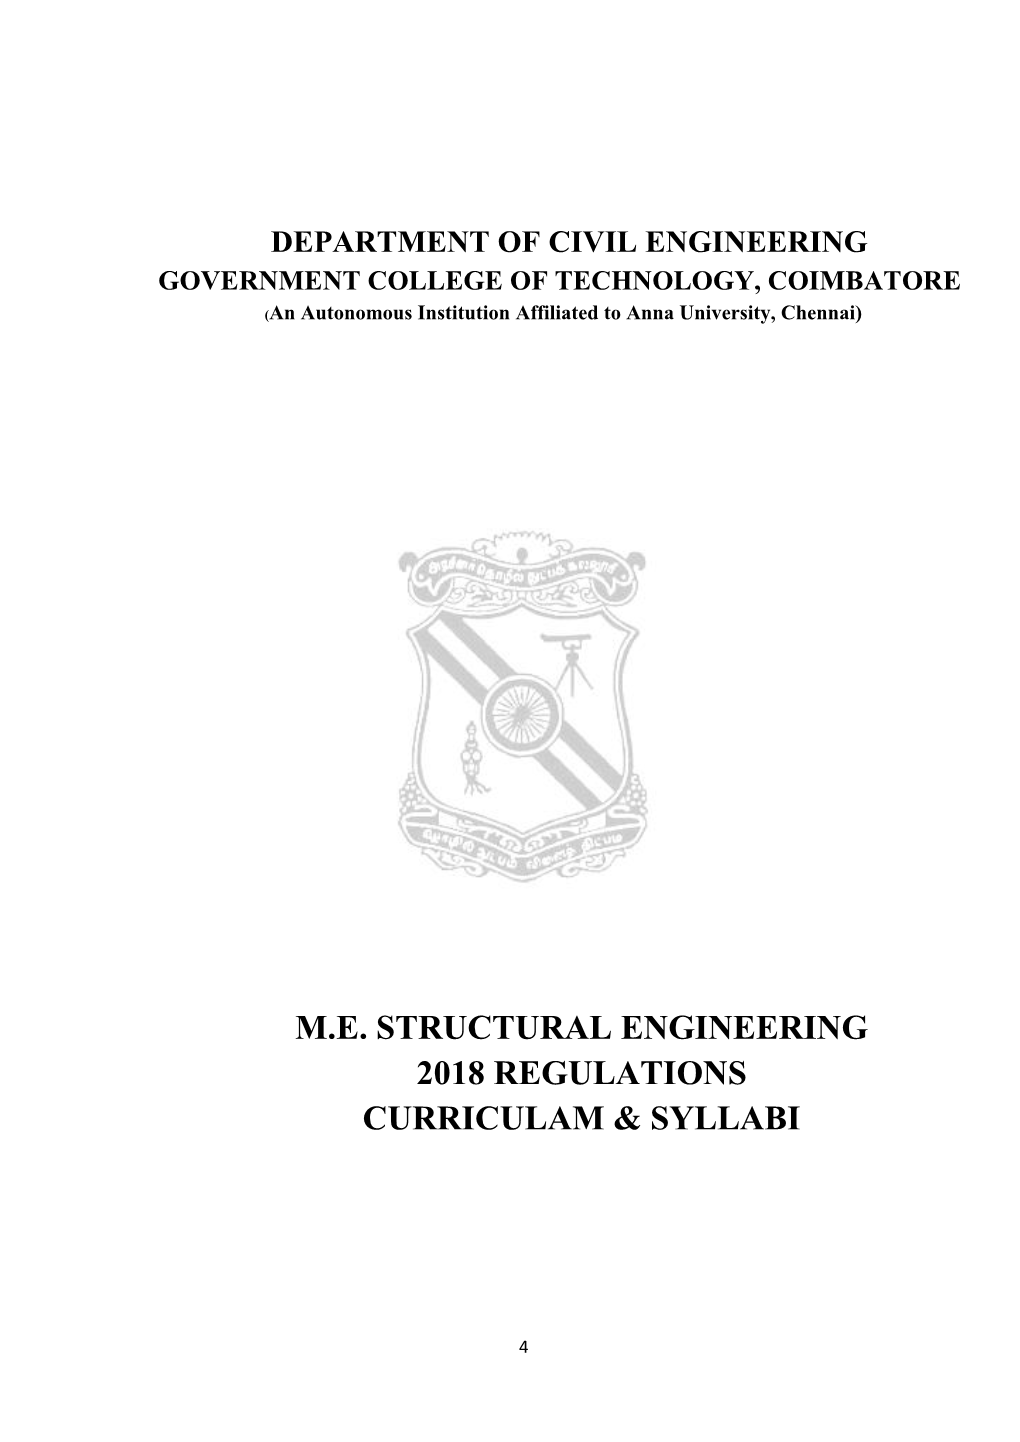 M.E. Structural Engineering 2018 Regulations Curriculam & Syllabi